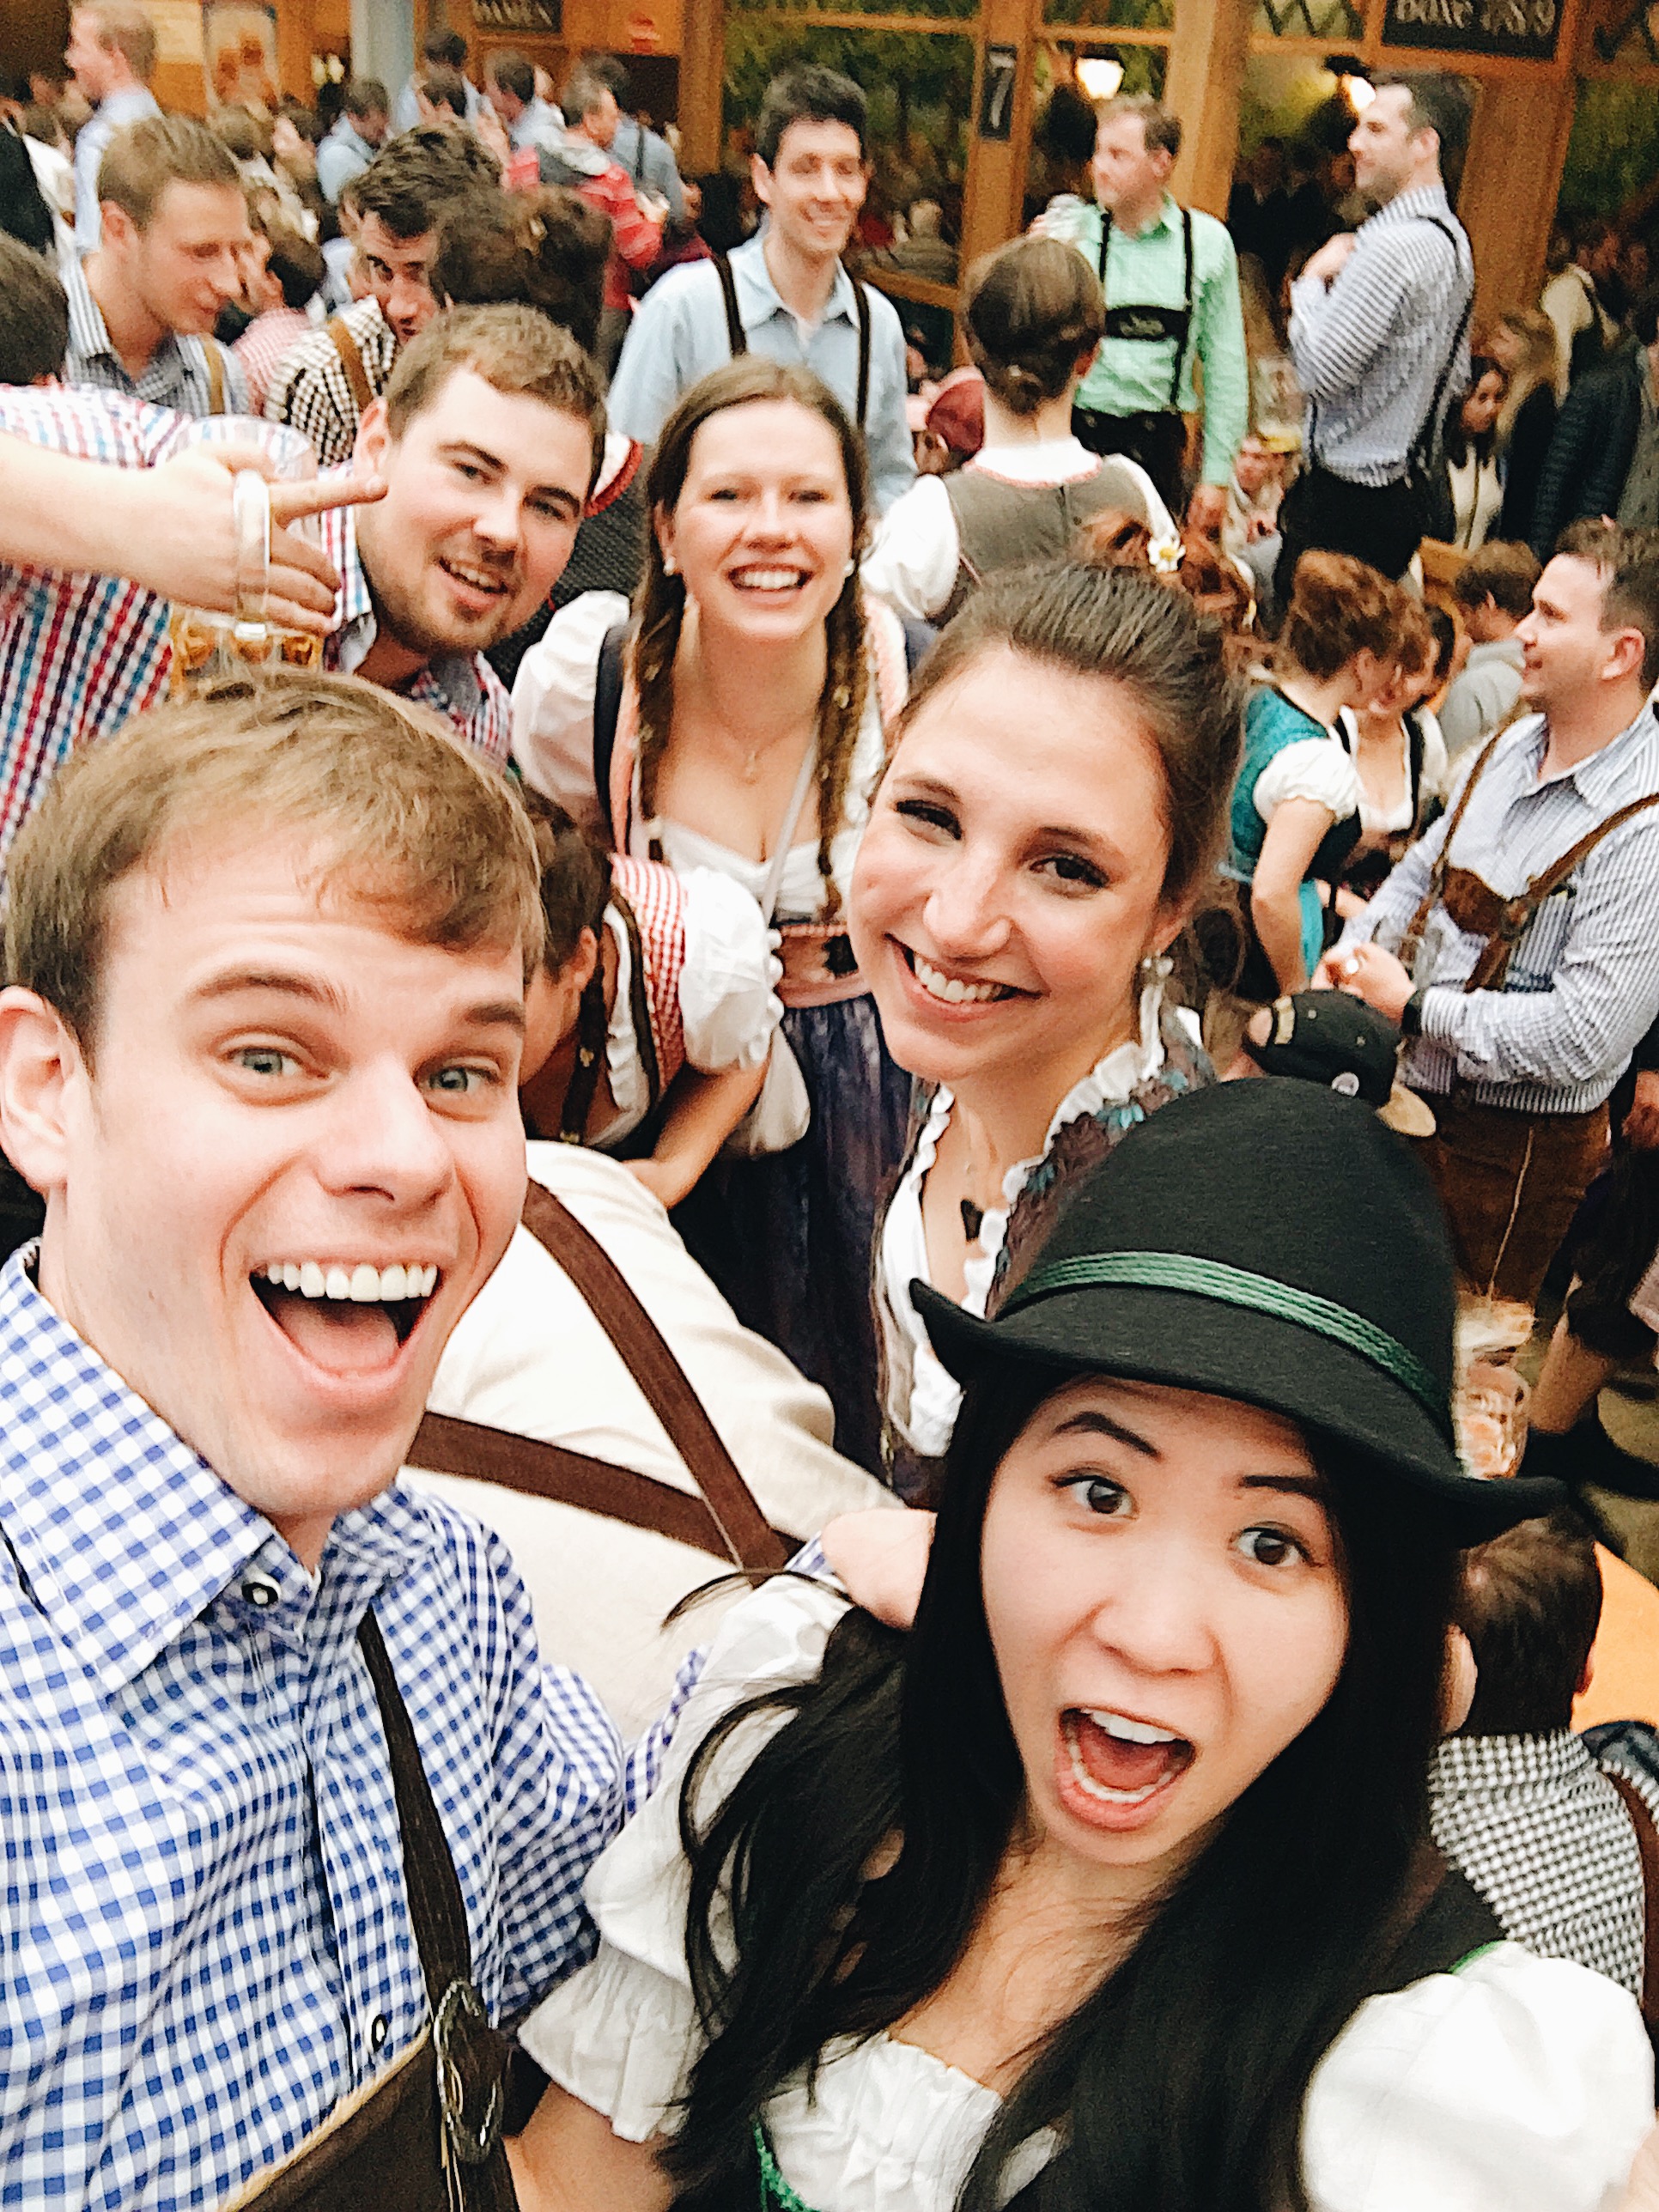 Selfie with strangers at Oktoberfest